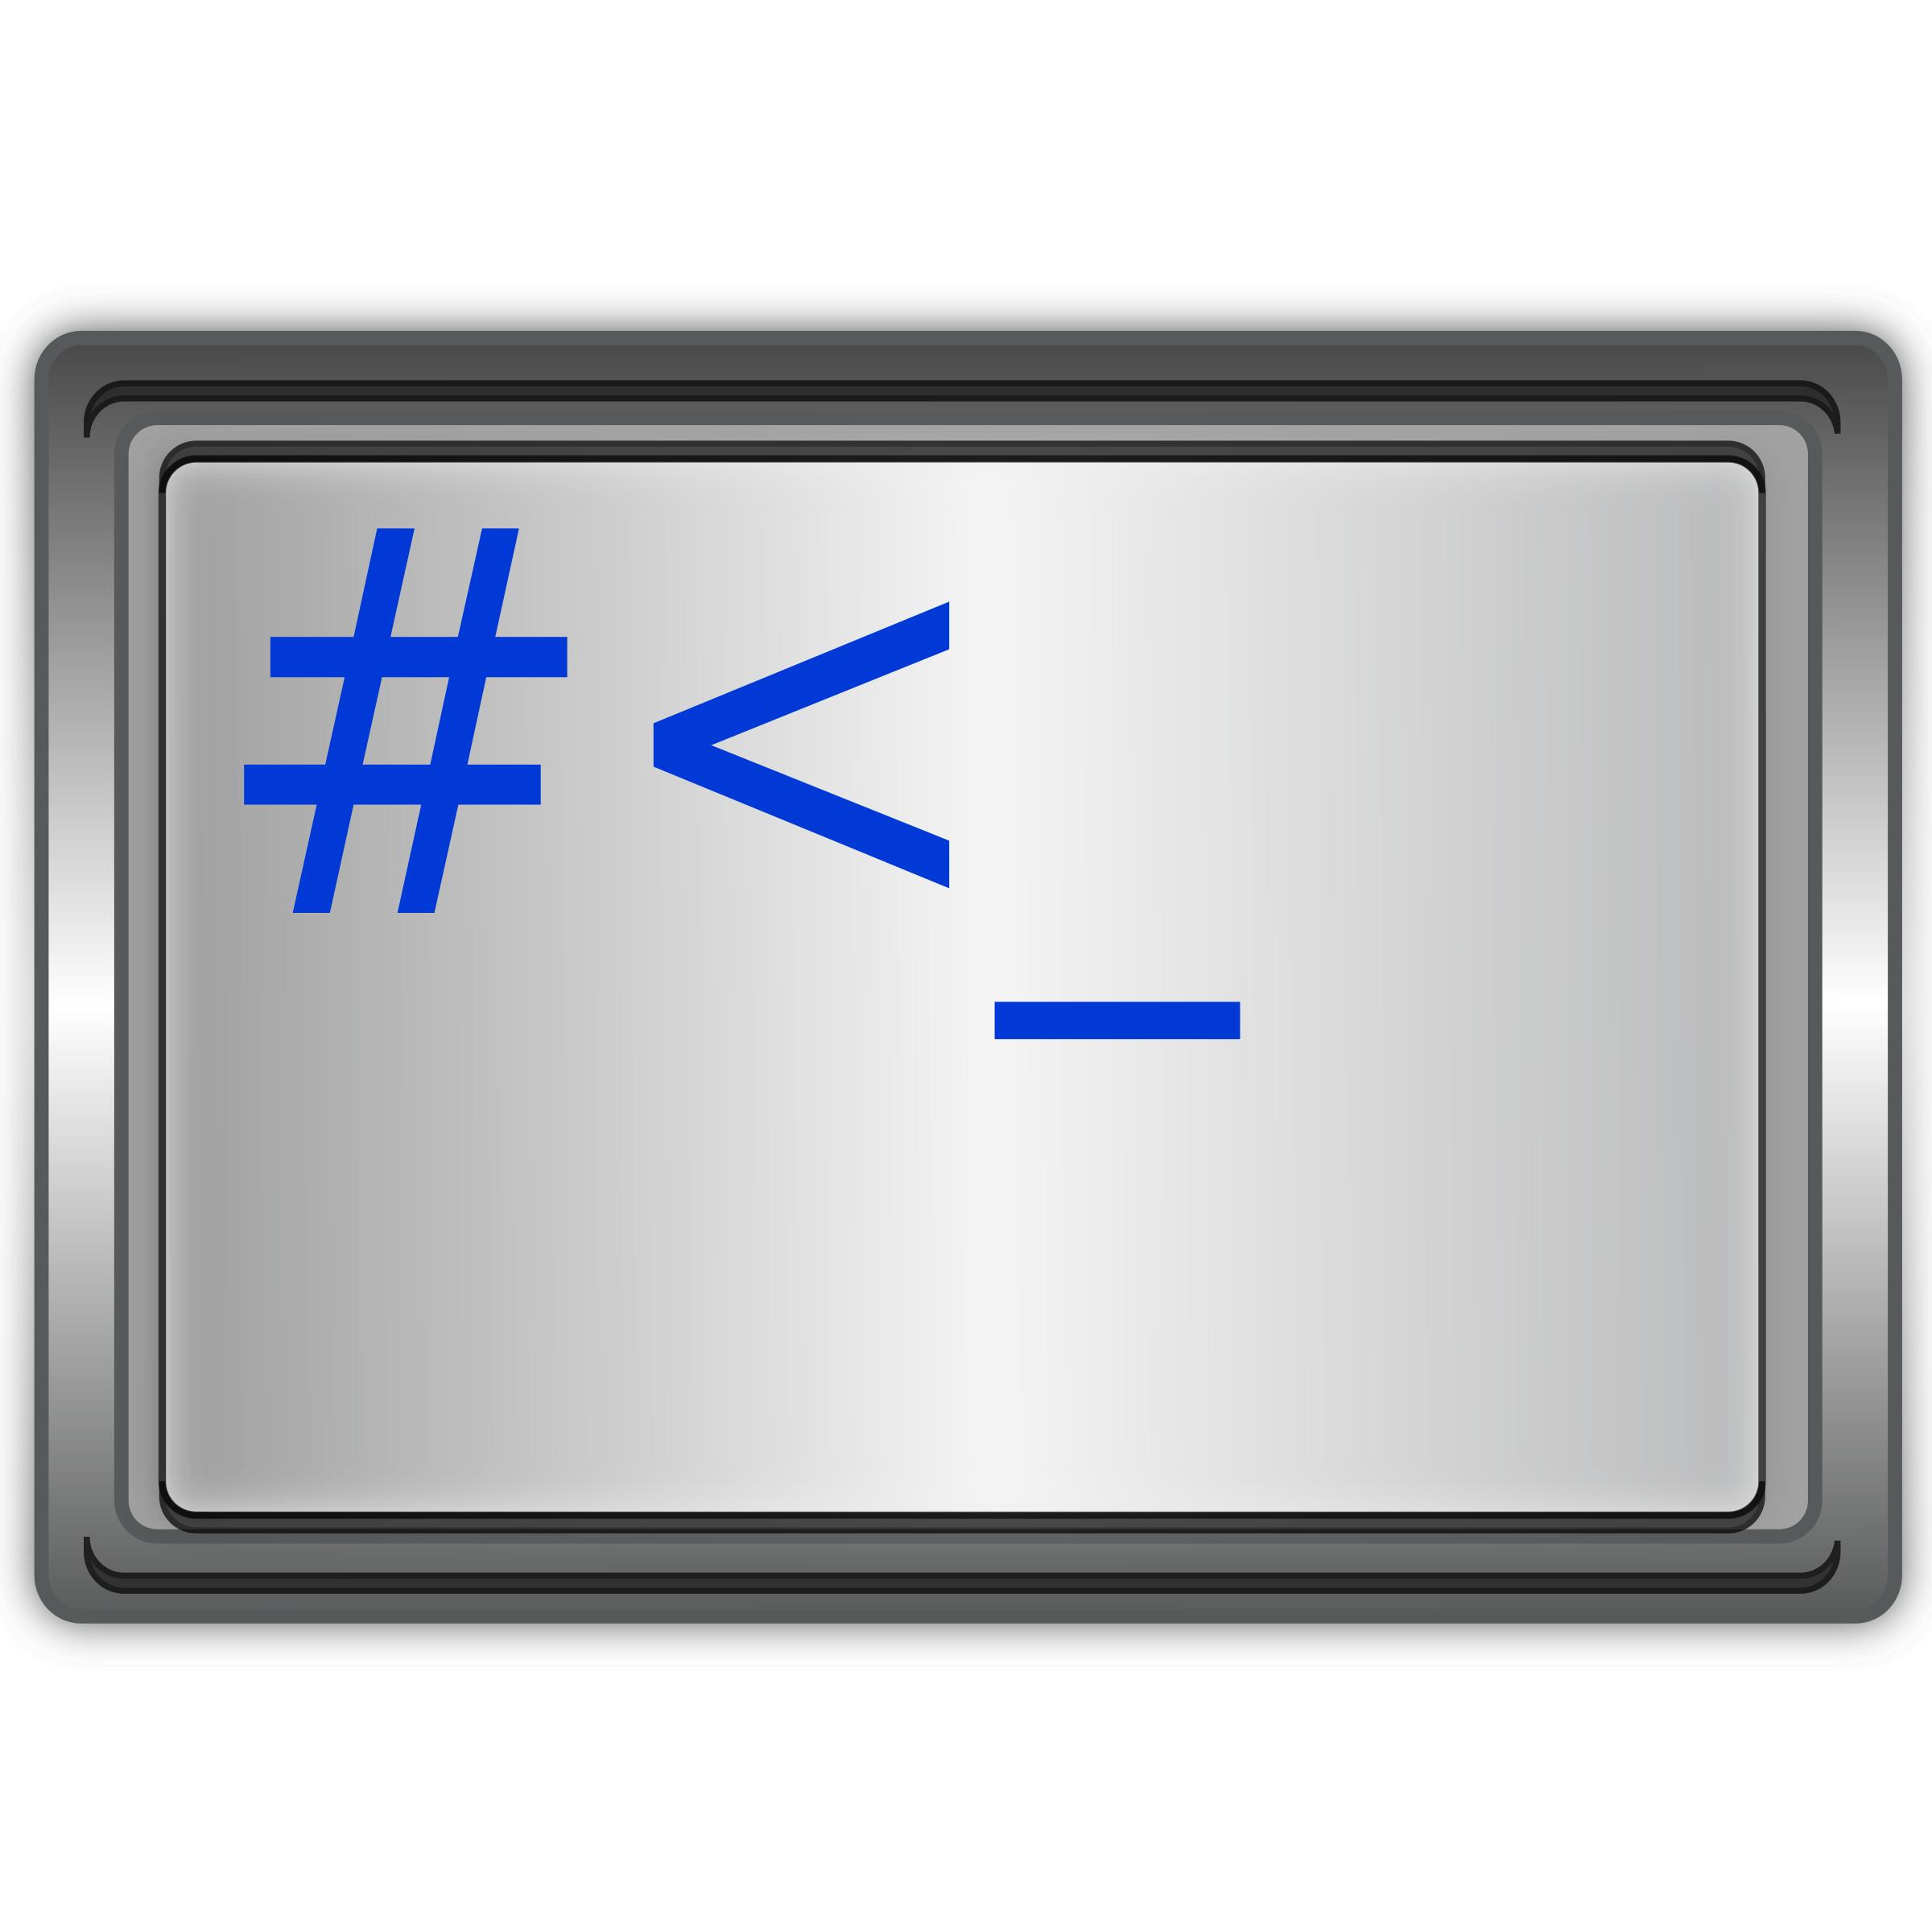 linux-unix-terminal PNG icons